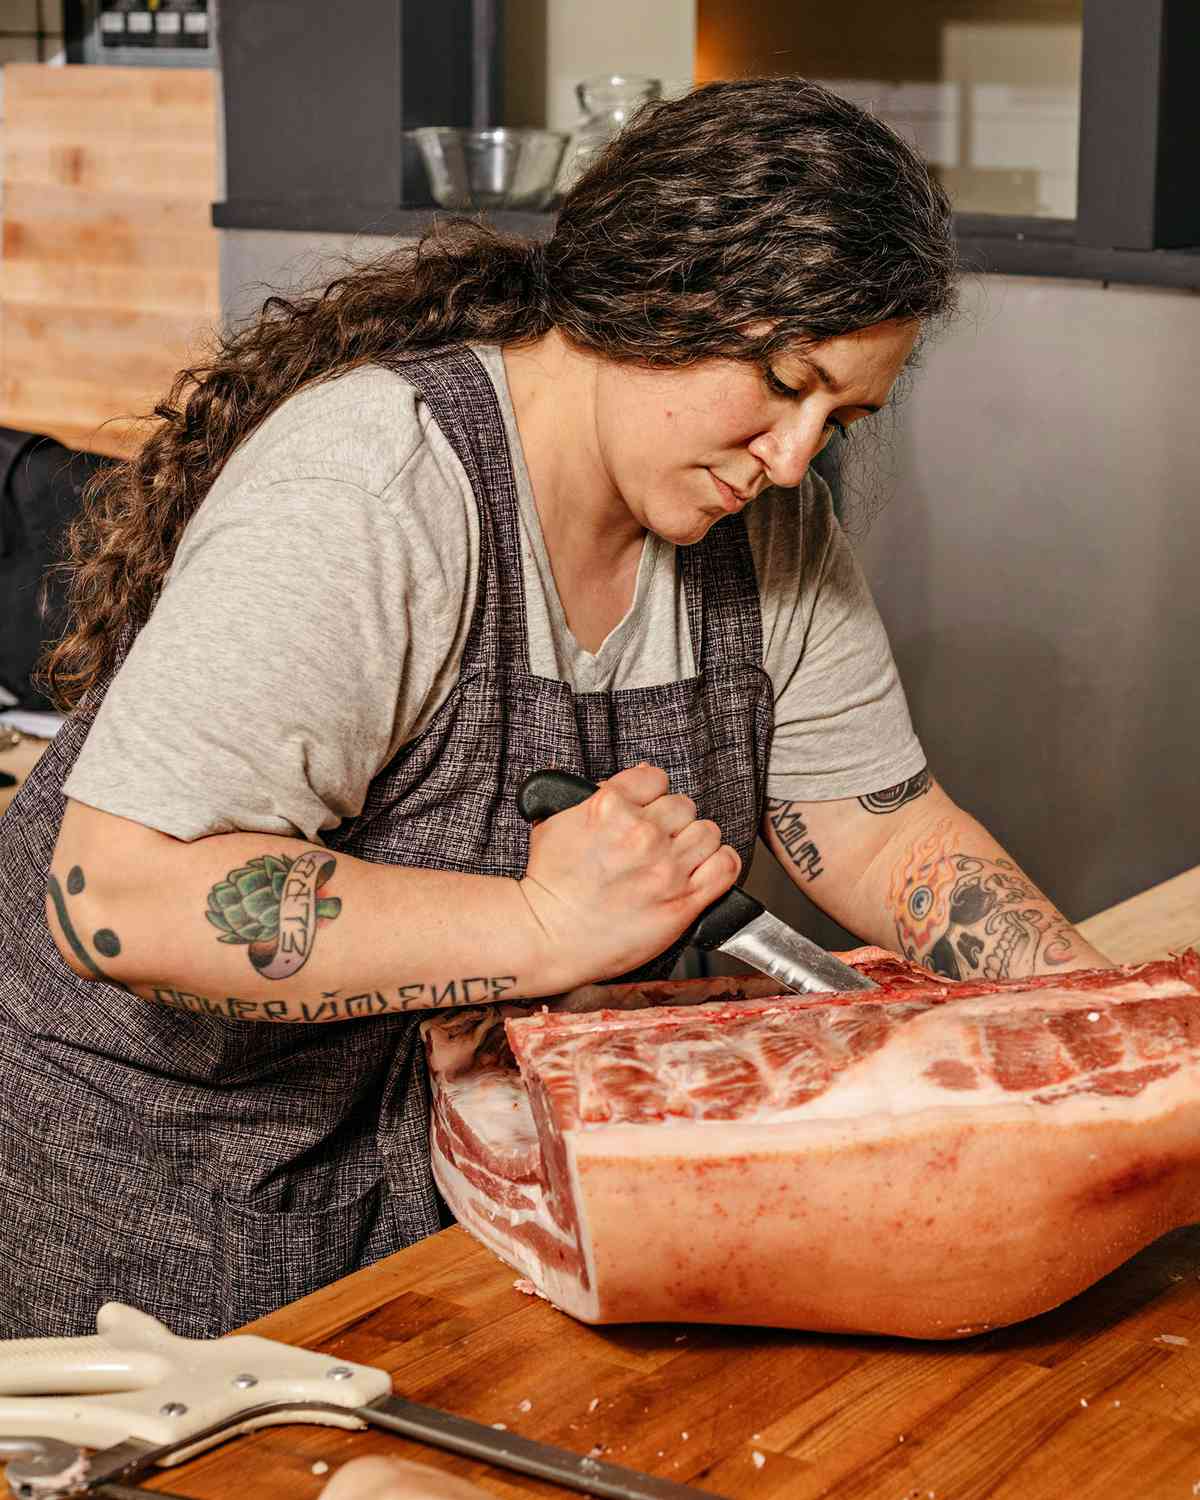 Restaurateur Lauren Garaventa, of bar and butcher shop The Ruby Brink